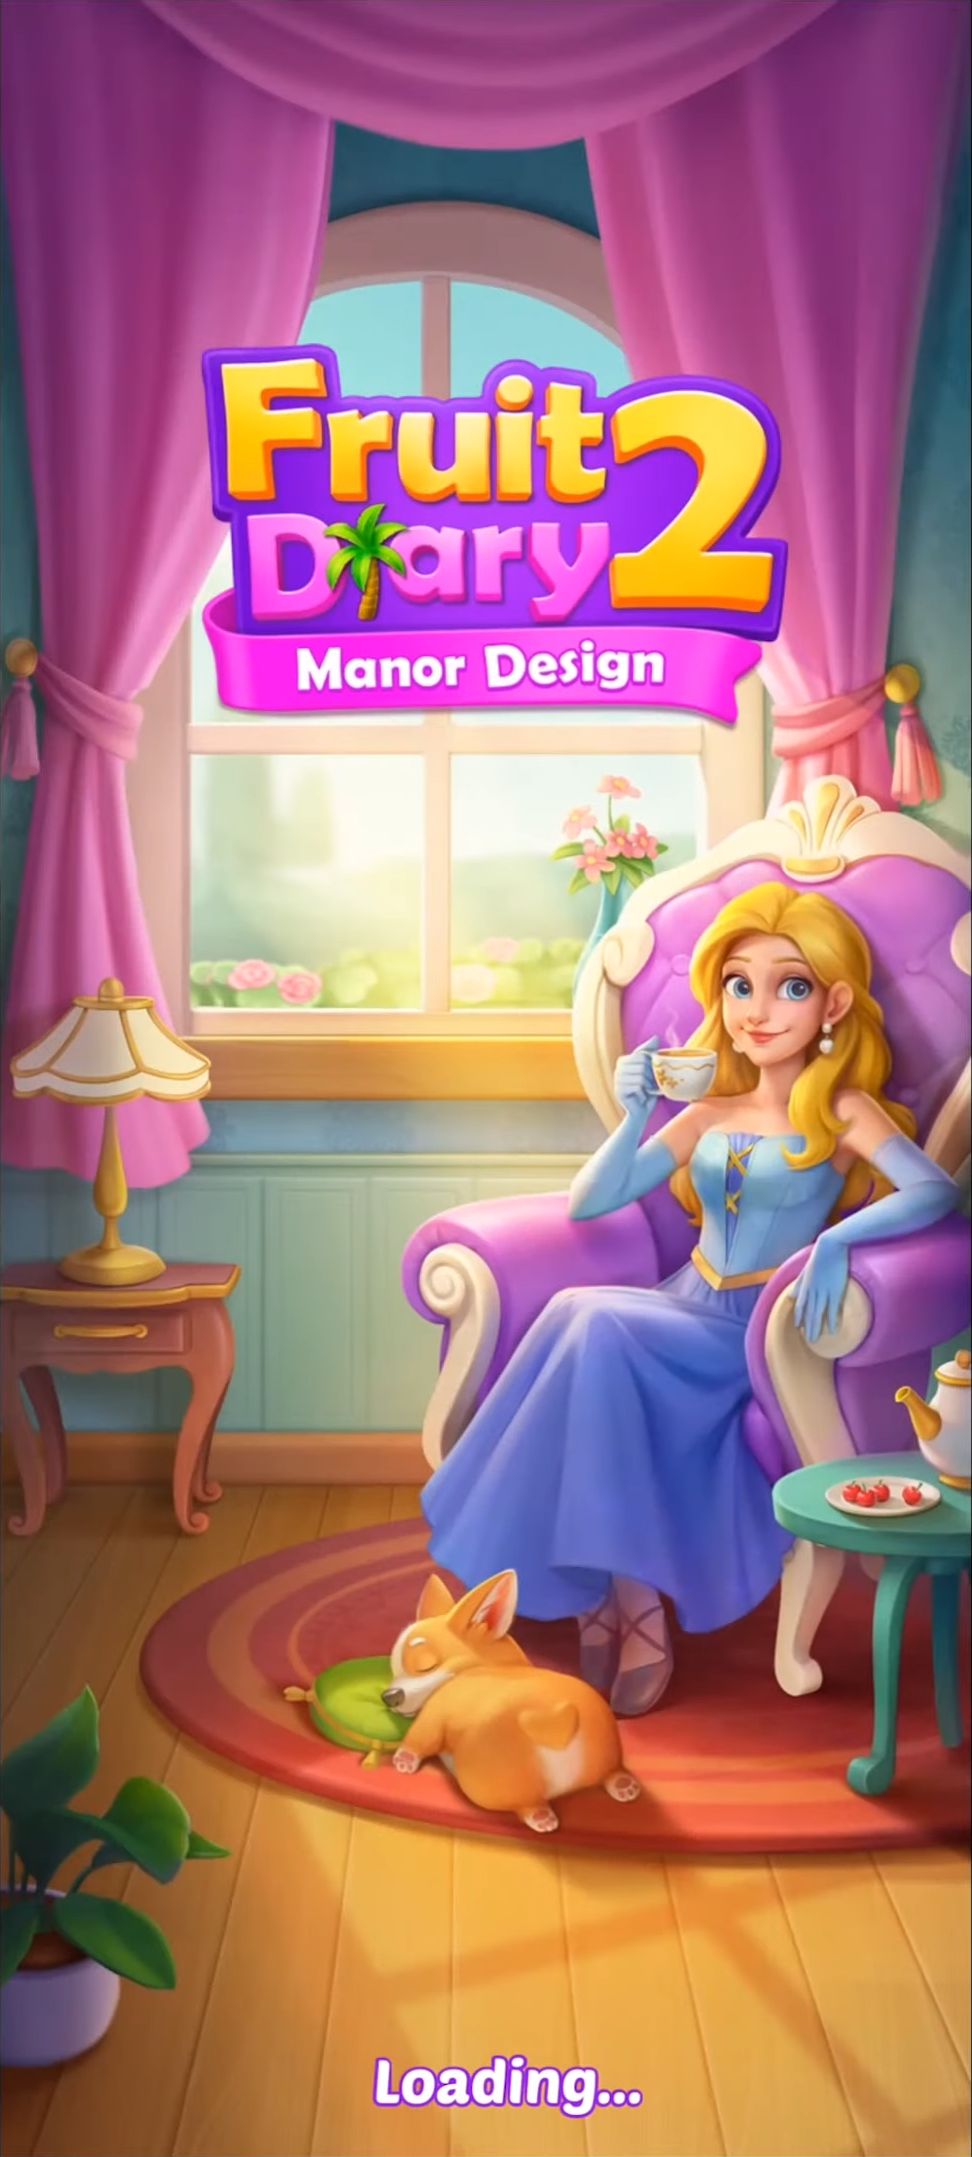 Download Fruit Diary 2: Manor Design für Android kostenlos.